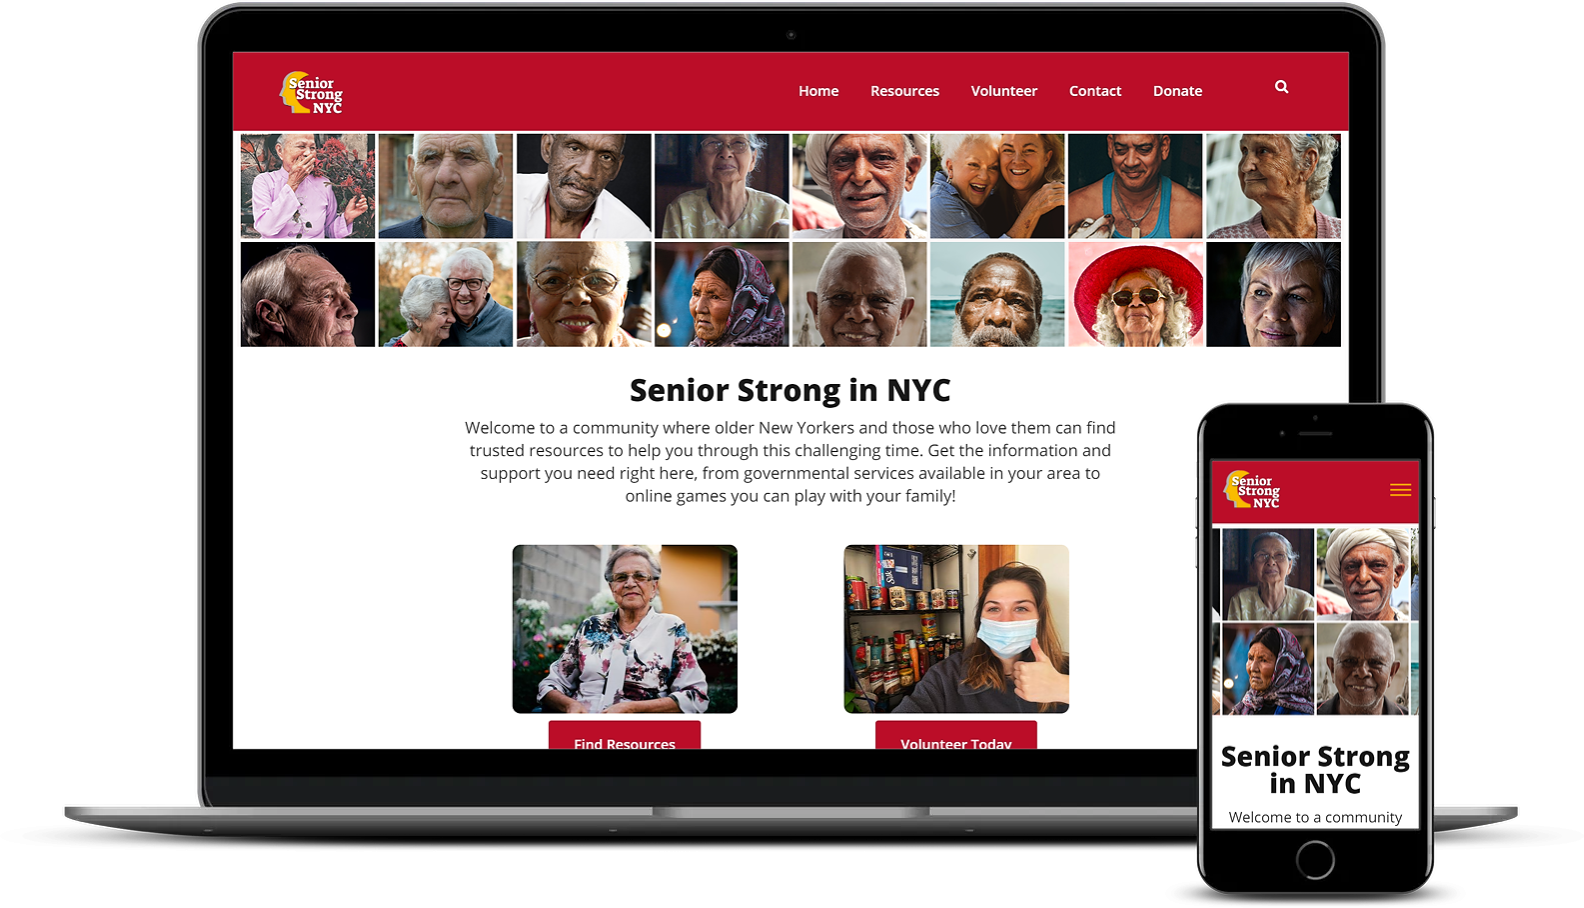 Wordpress Development for Senior Strong NYC